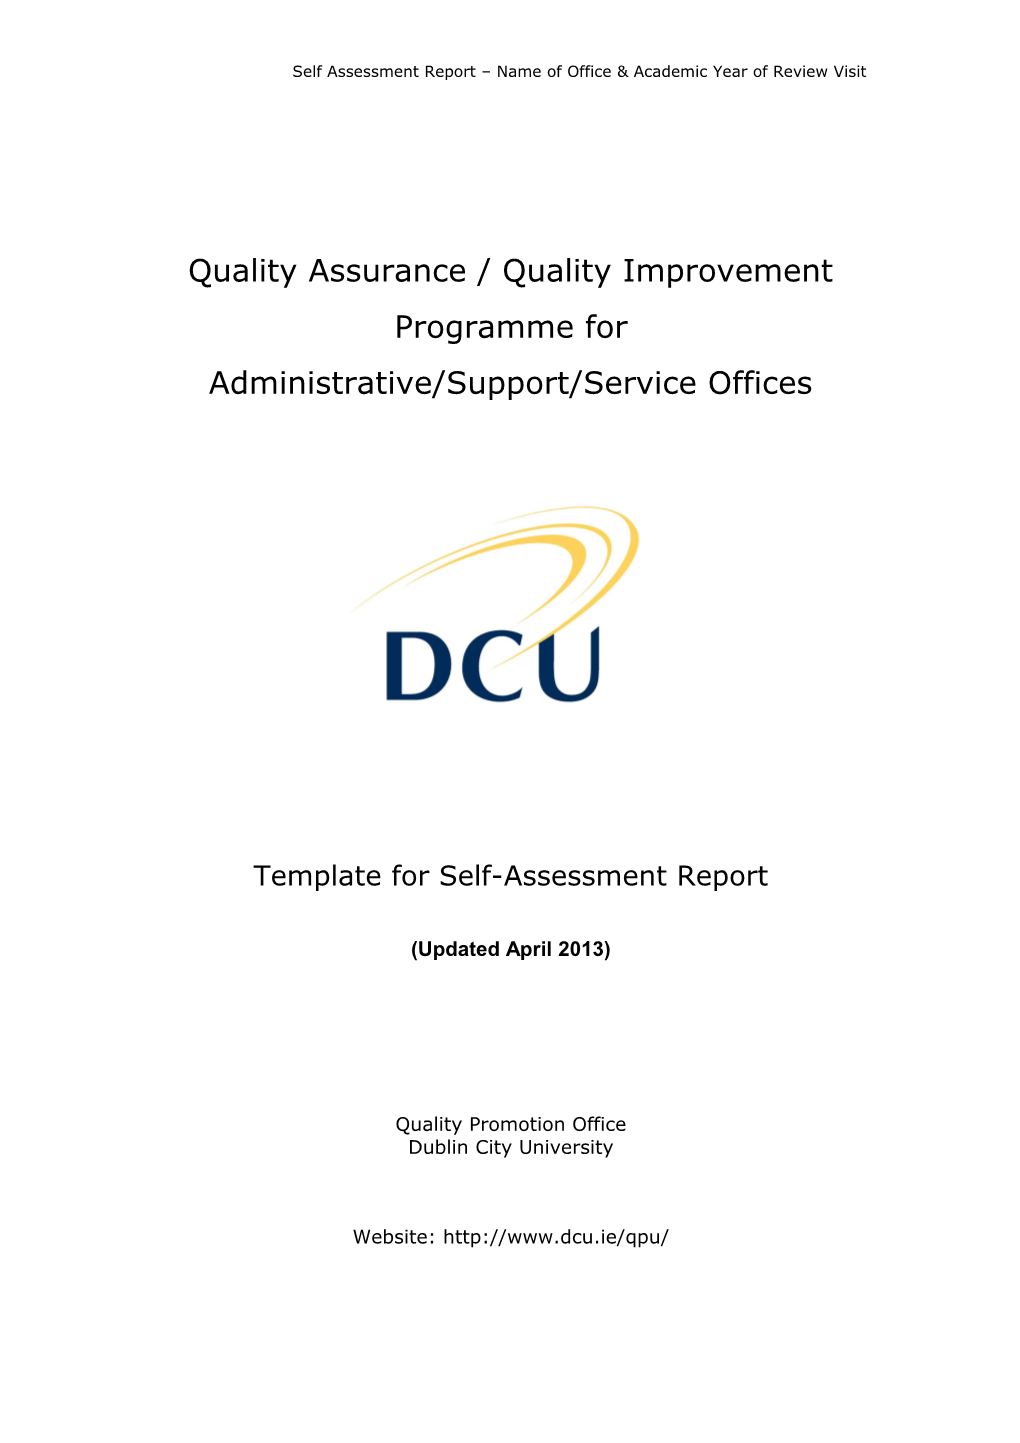 Quality Assurance / Quality Improvement